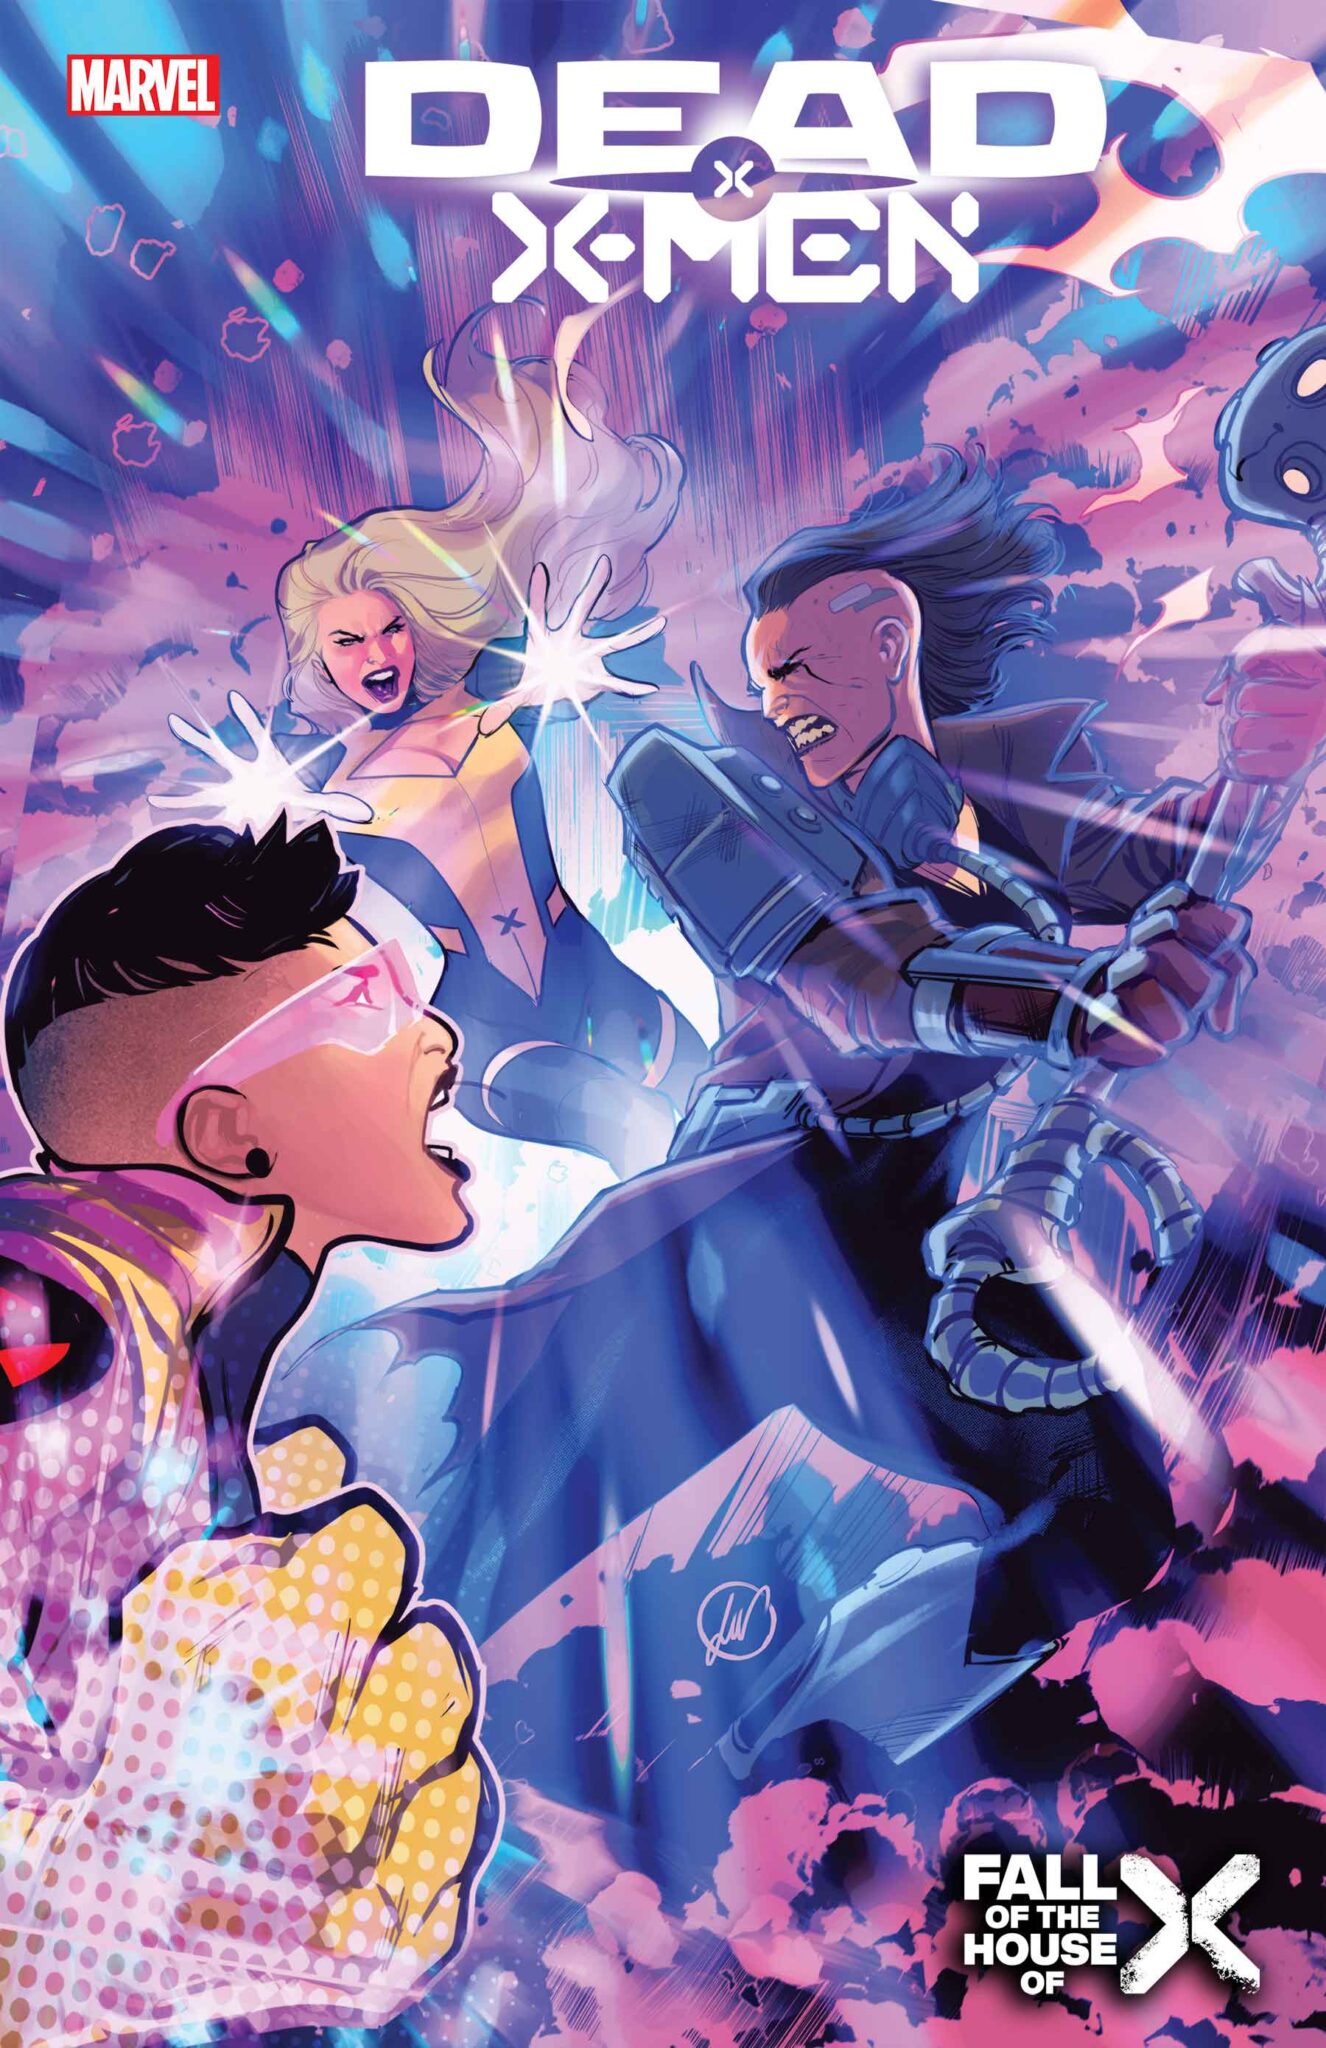 Dead X-Men #4 cover